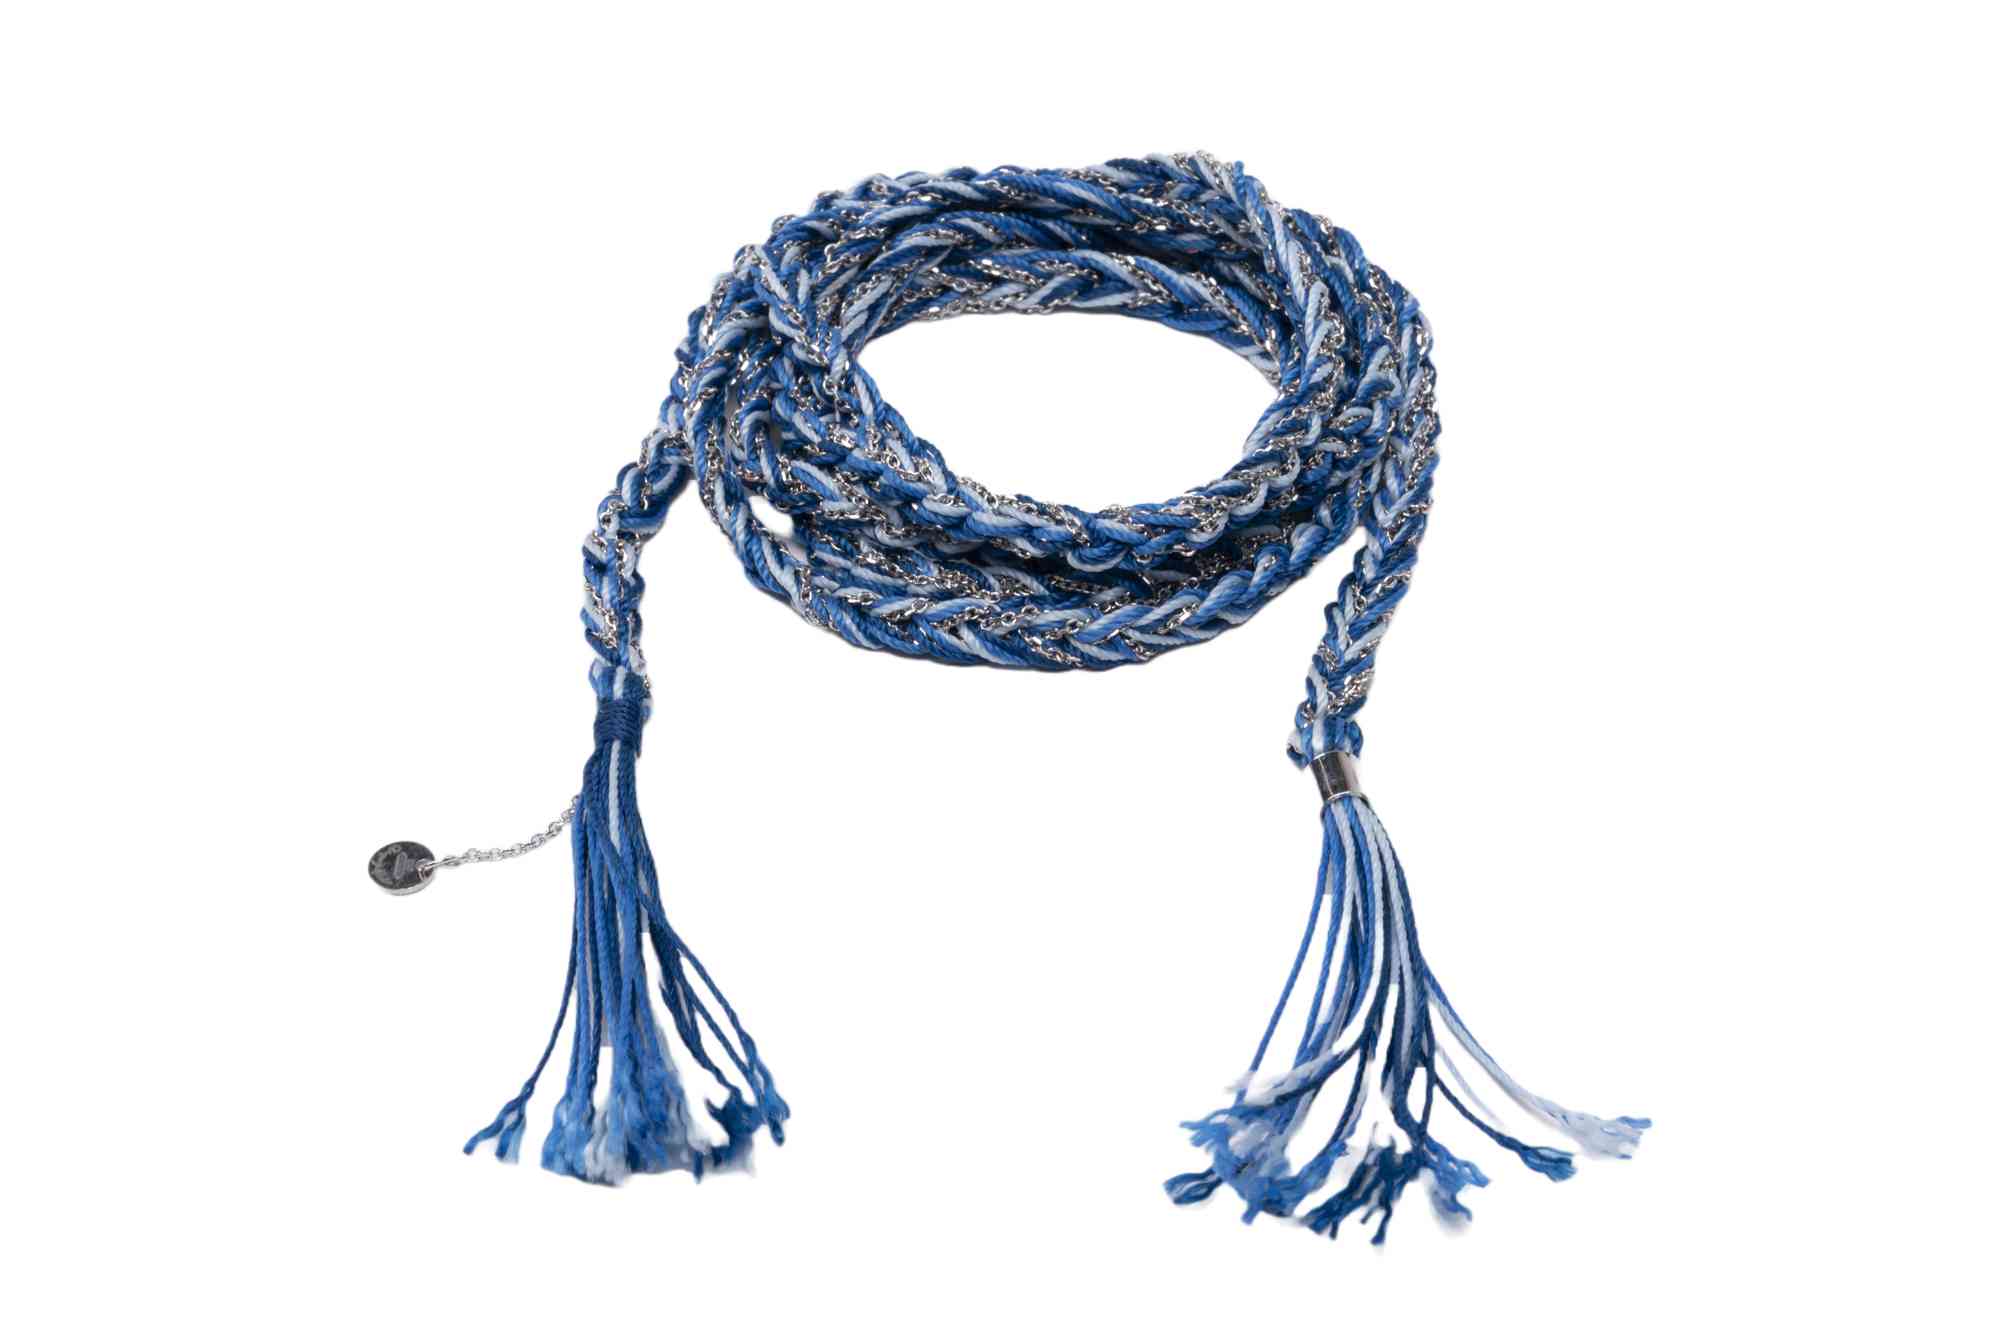 Collana-Sciarpa-uncinetto-con-cotone-blu-argento-Argentofilato-in-argento-925